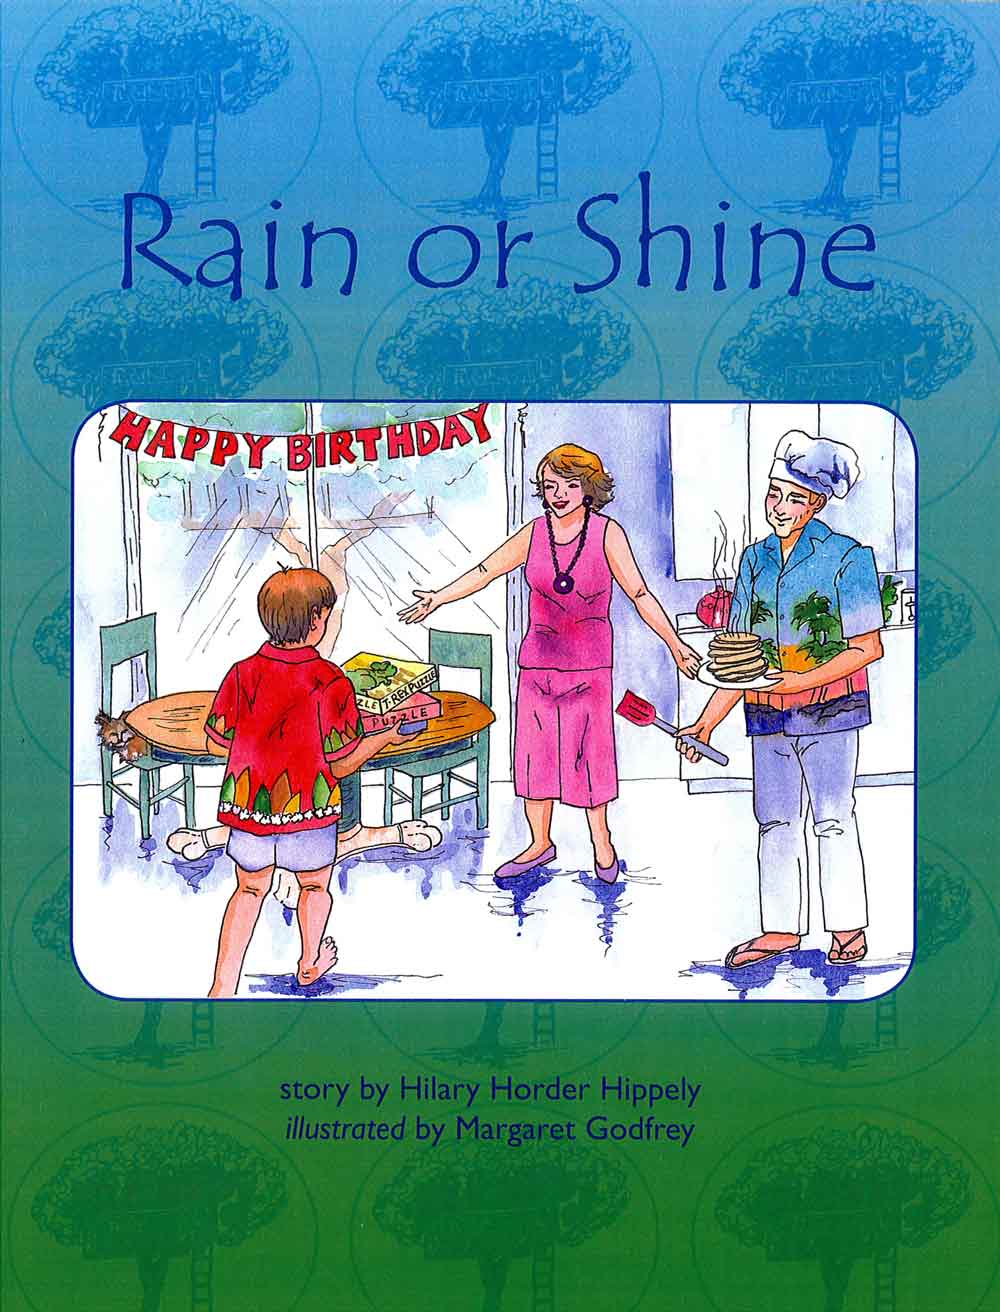 childrens-book-on-adoption-rain-or-shine